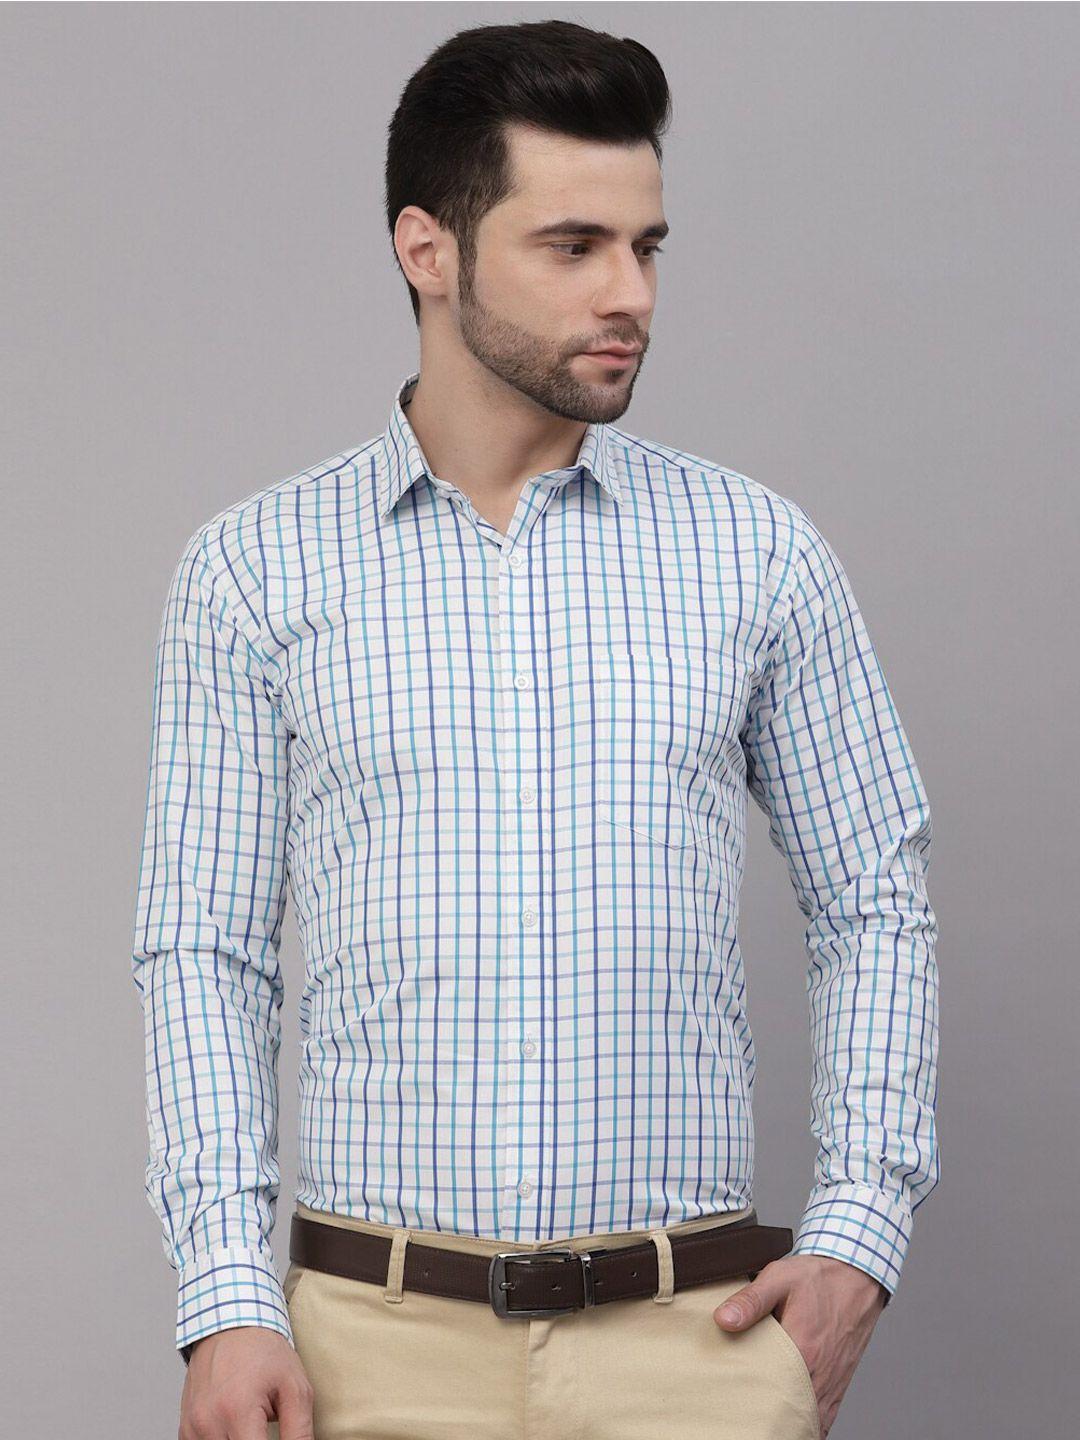 style quotient smart tartan checks checked formal shirt